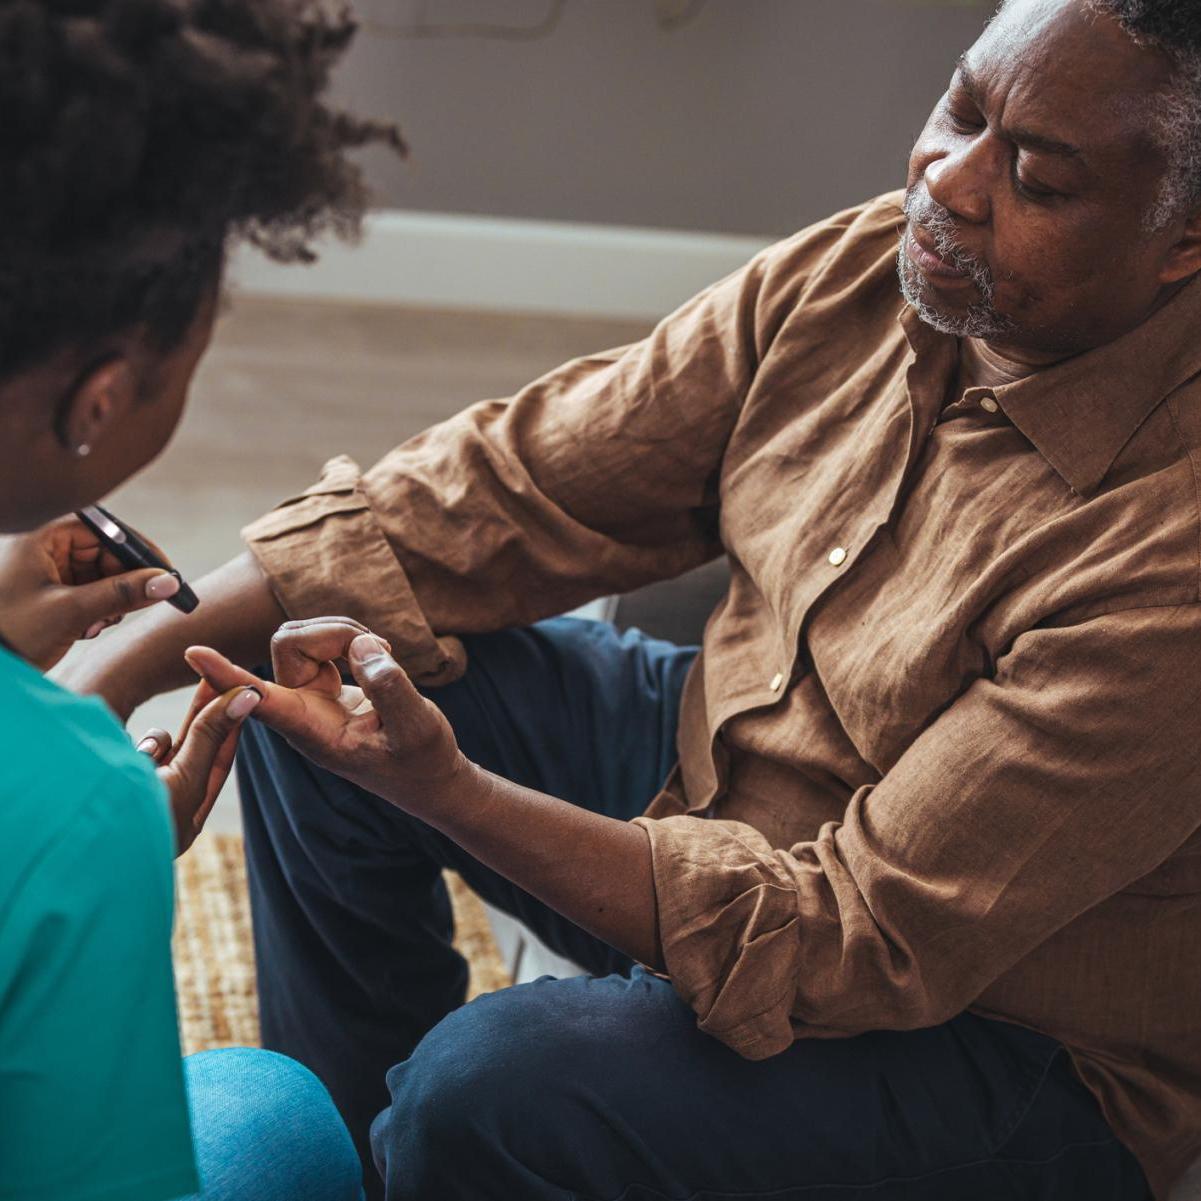 A Black female medical professional tests an older Black man for diabetes